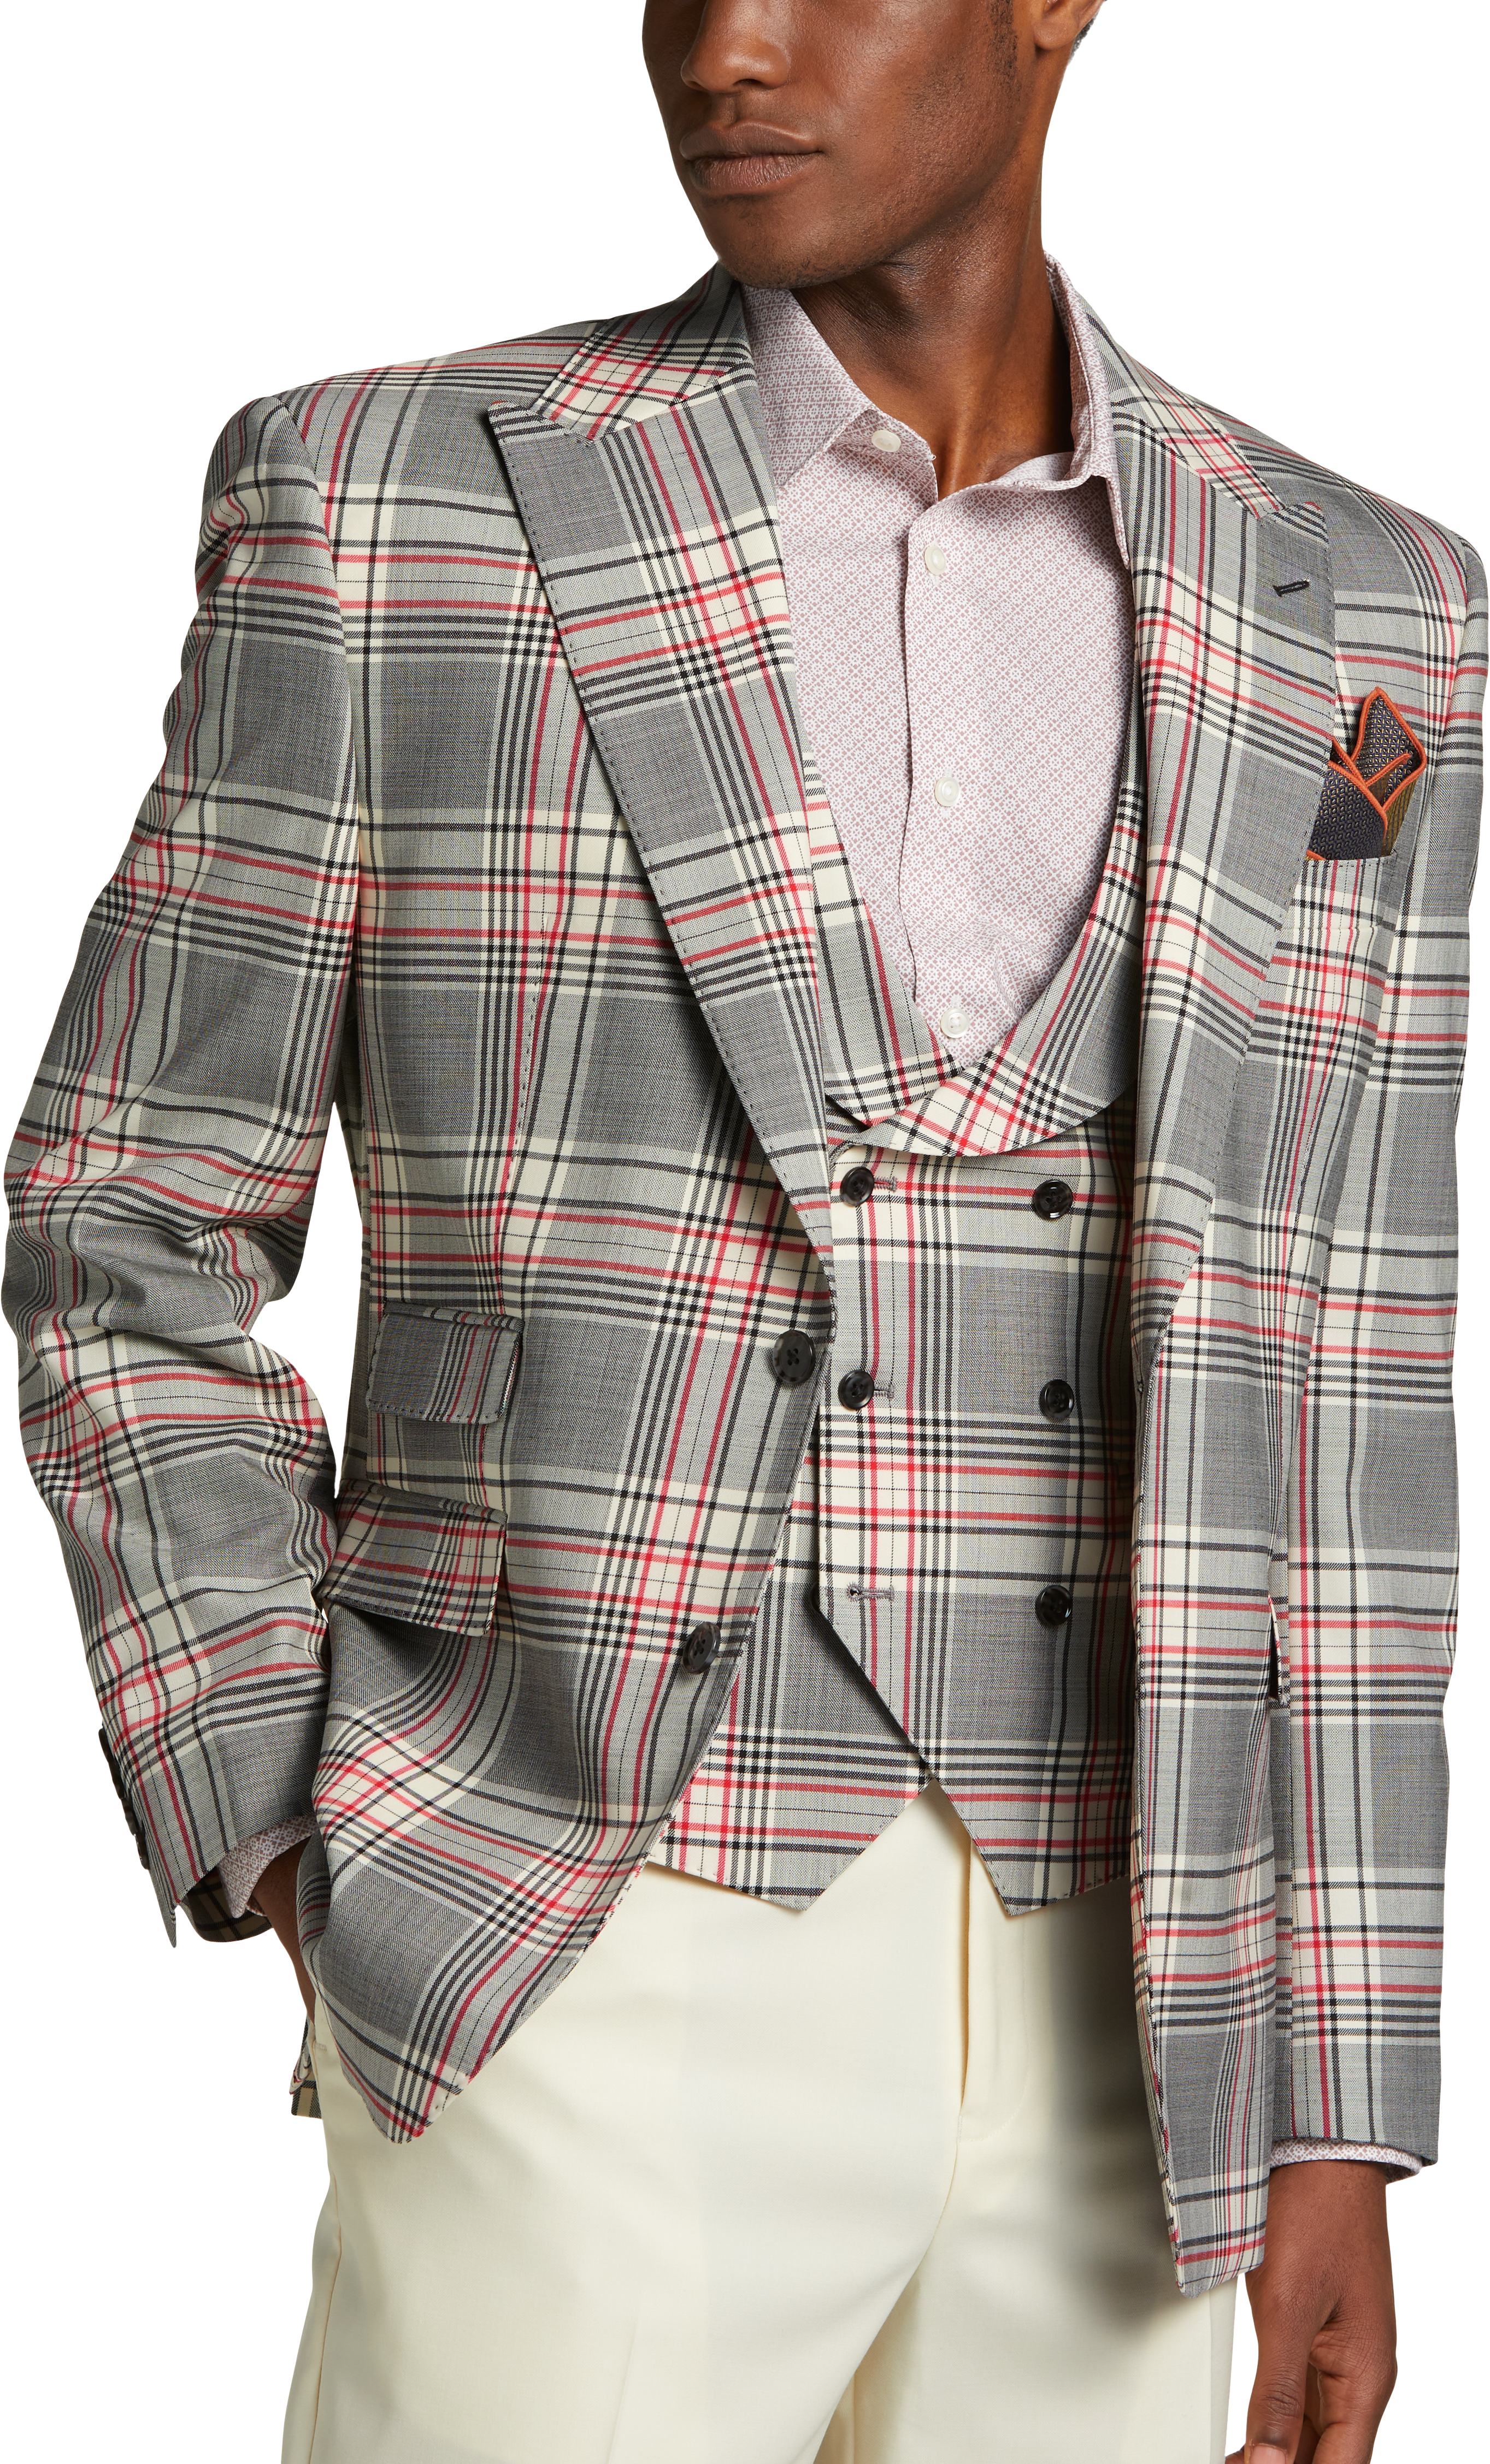 Classic Fit Peak Lapel Suit Separates Jacket